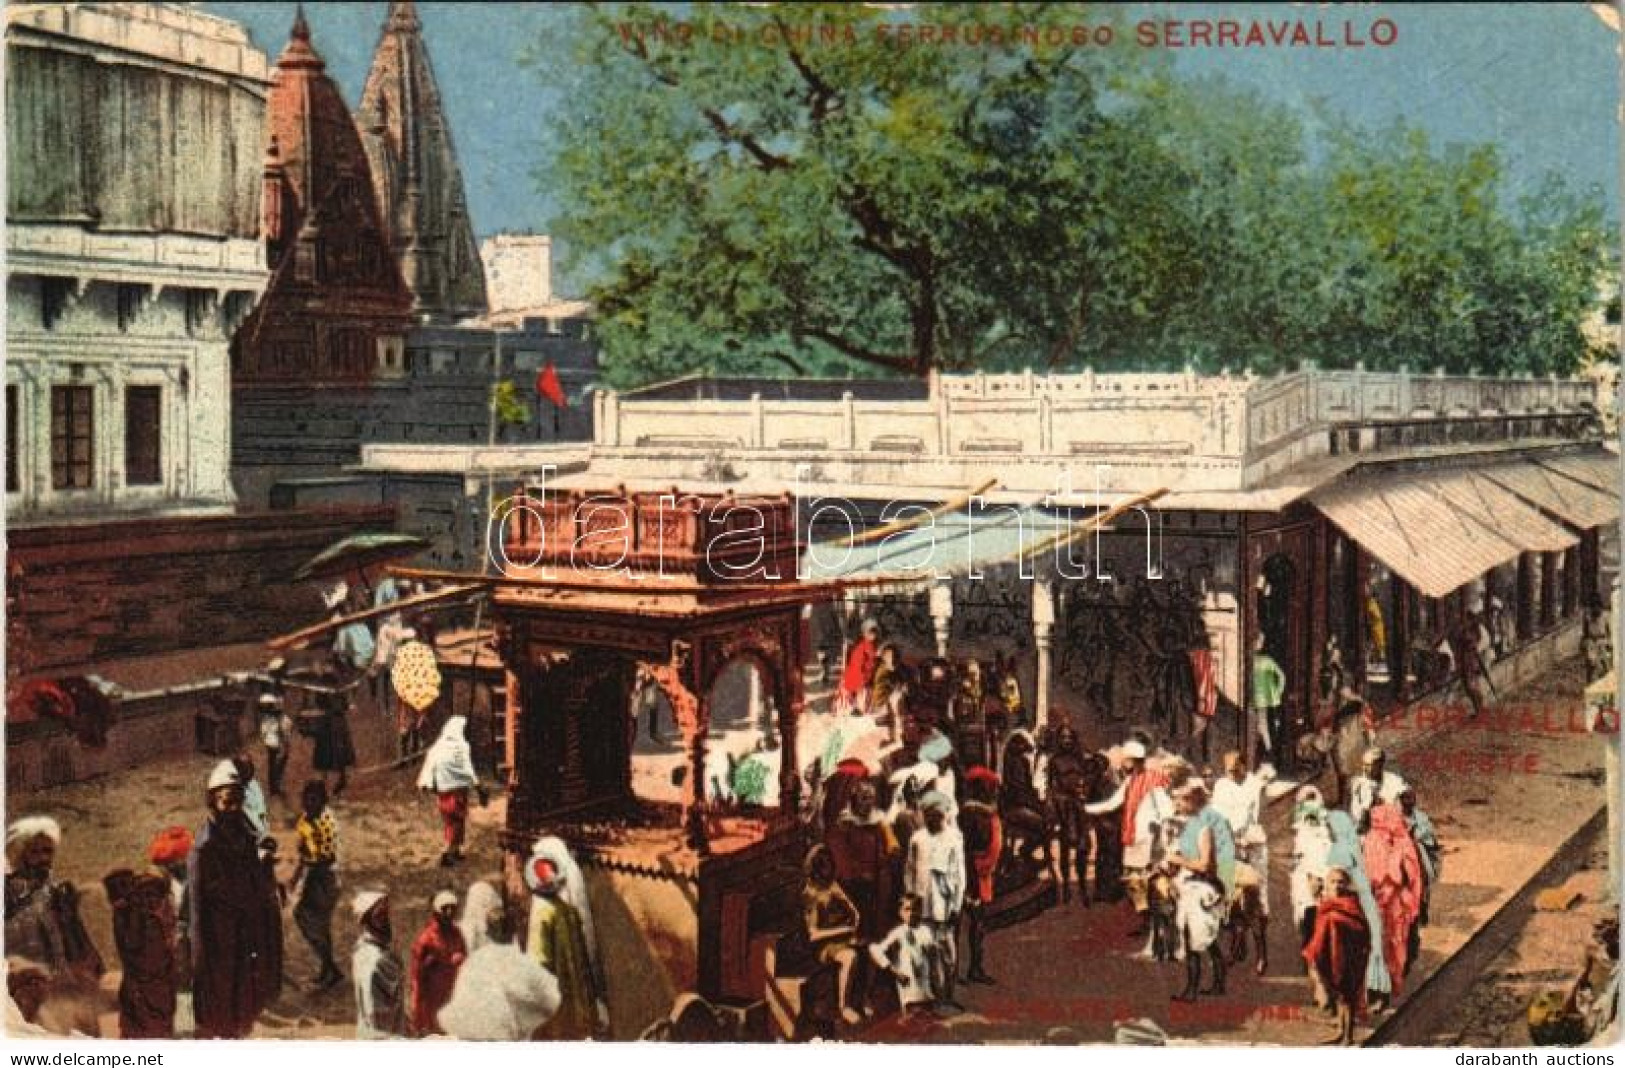 ** T2/T3 Varanasi, Benares; Bisharnat / Street View, Market, Indian Folklore. "Vino Di China Ferruginoso Serravallo" Ser - Non Classés